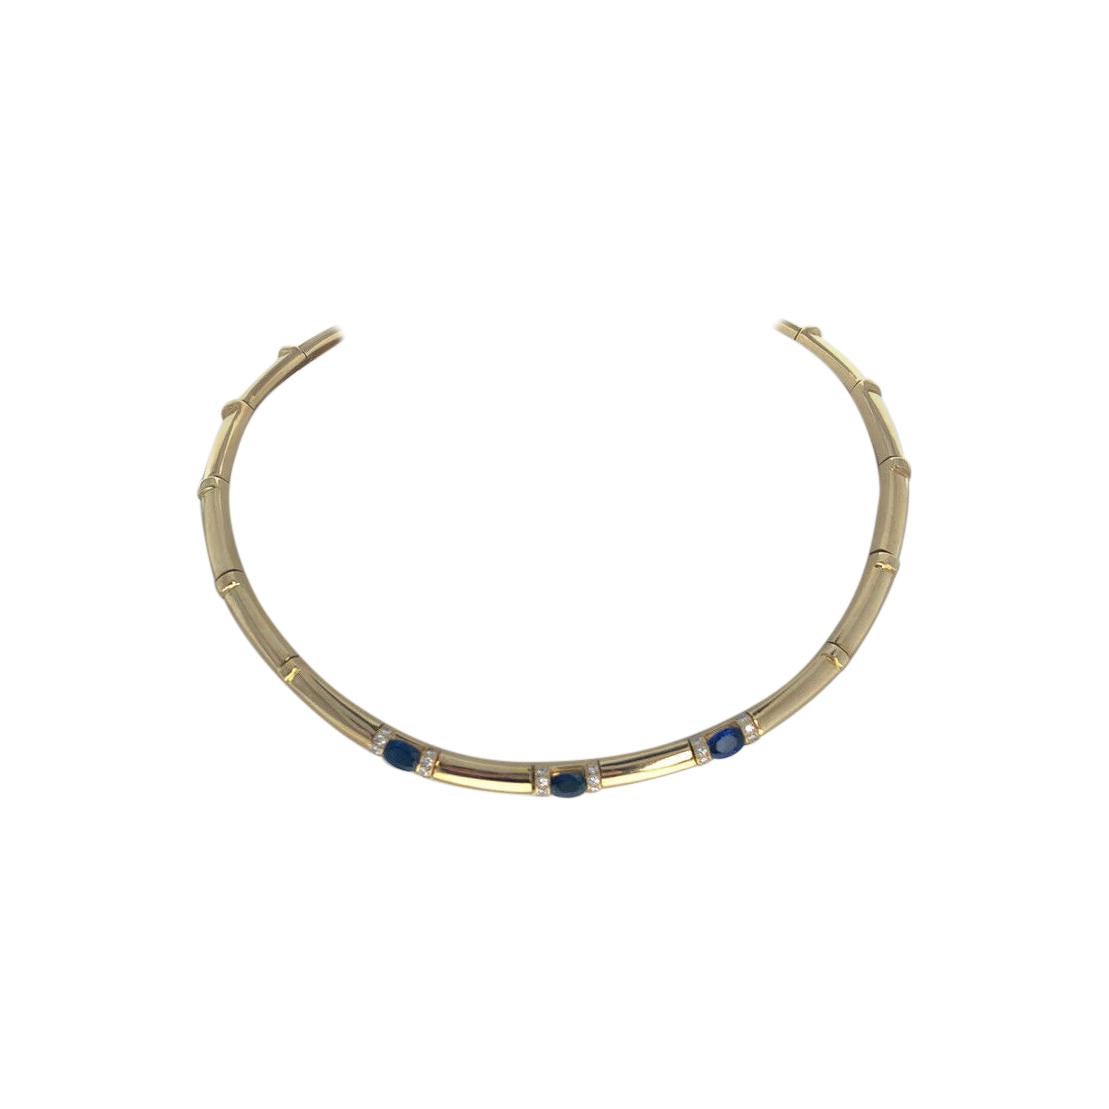 Chaumet 18 Karat Yellow Gold, Sapphire and Diamond Necklace 2.80 Carat 68.8g